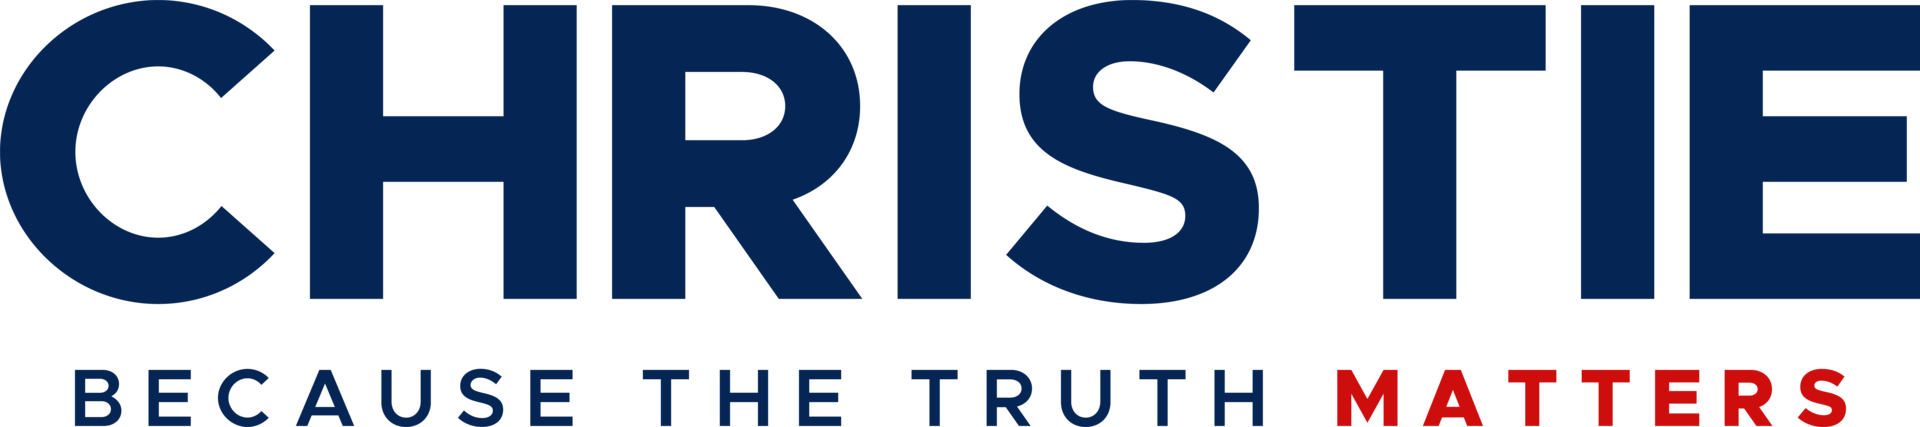 Christie campaign logo